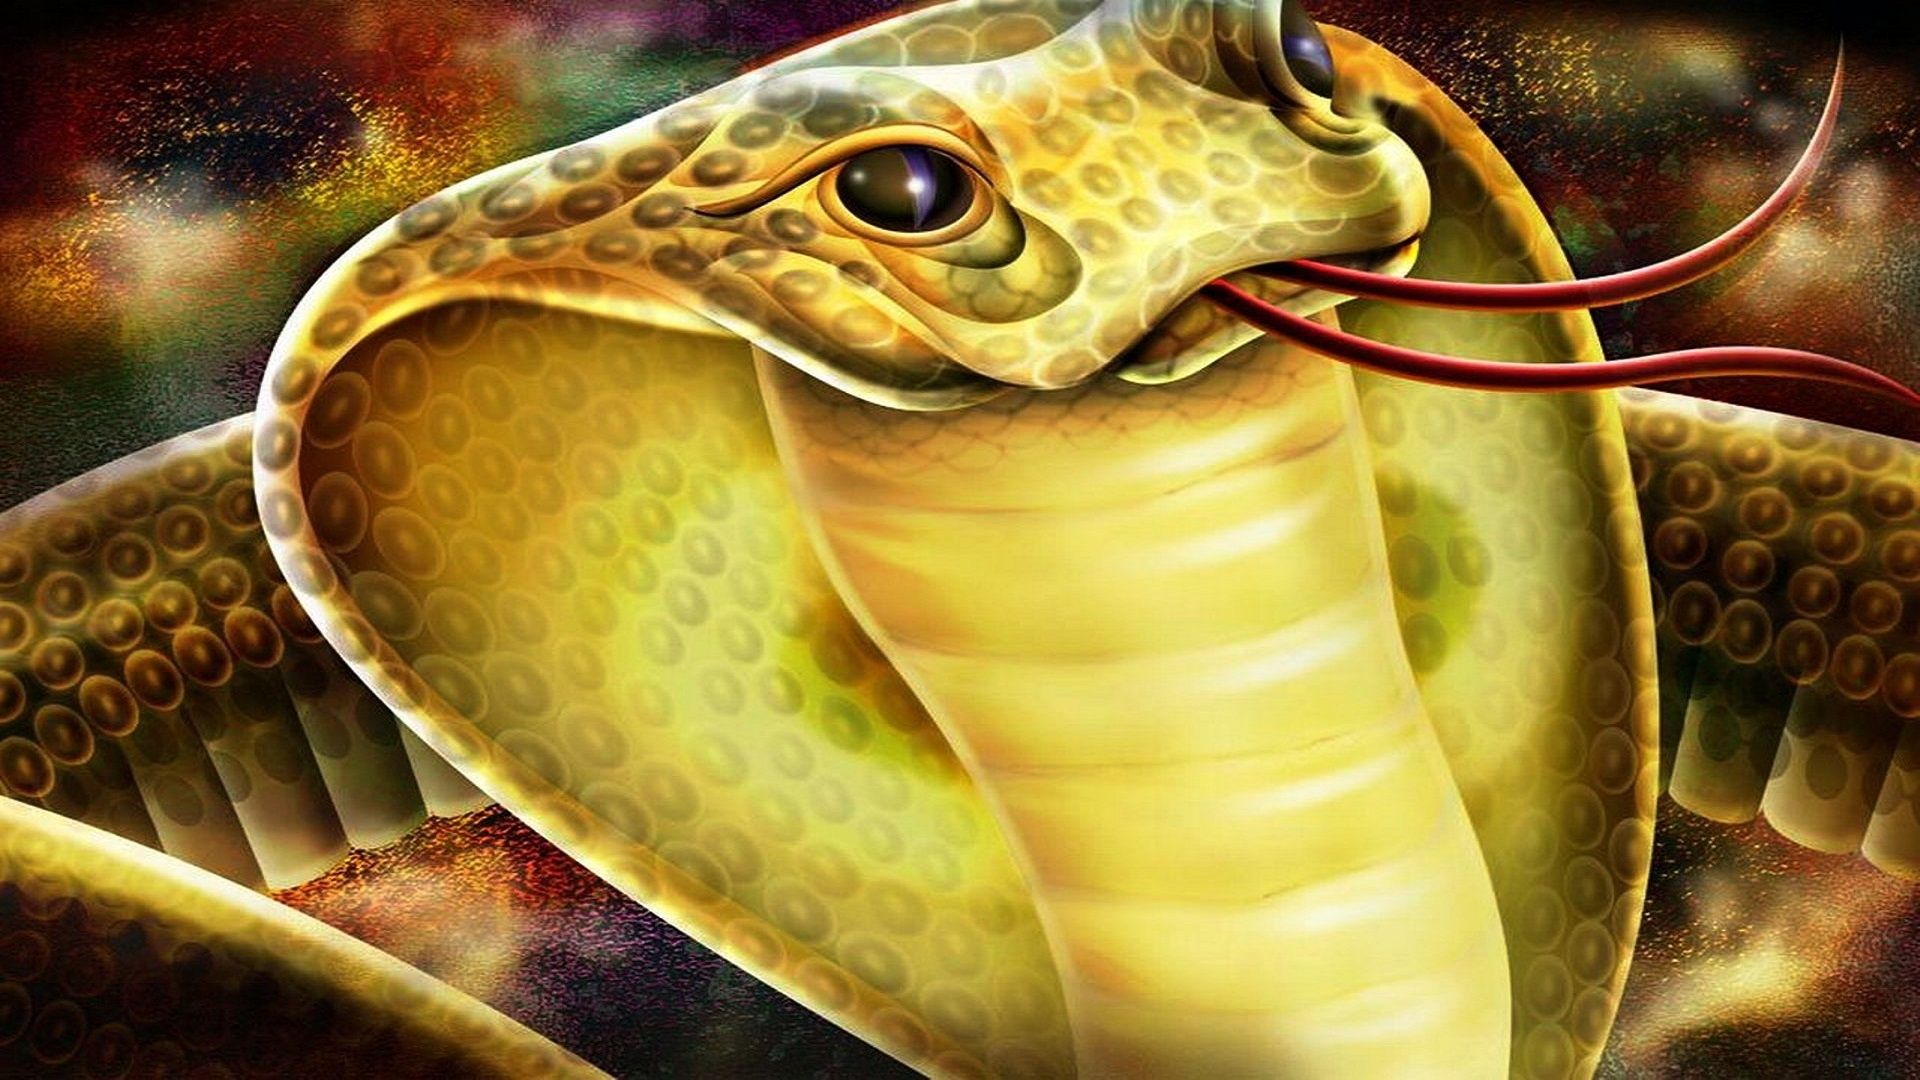 roi cobra hd fond d'écran télécharger,serpent,reptile,serpent,elapidae